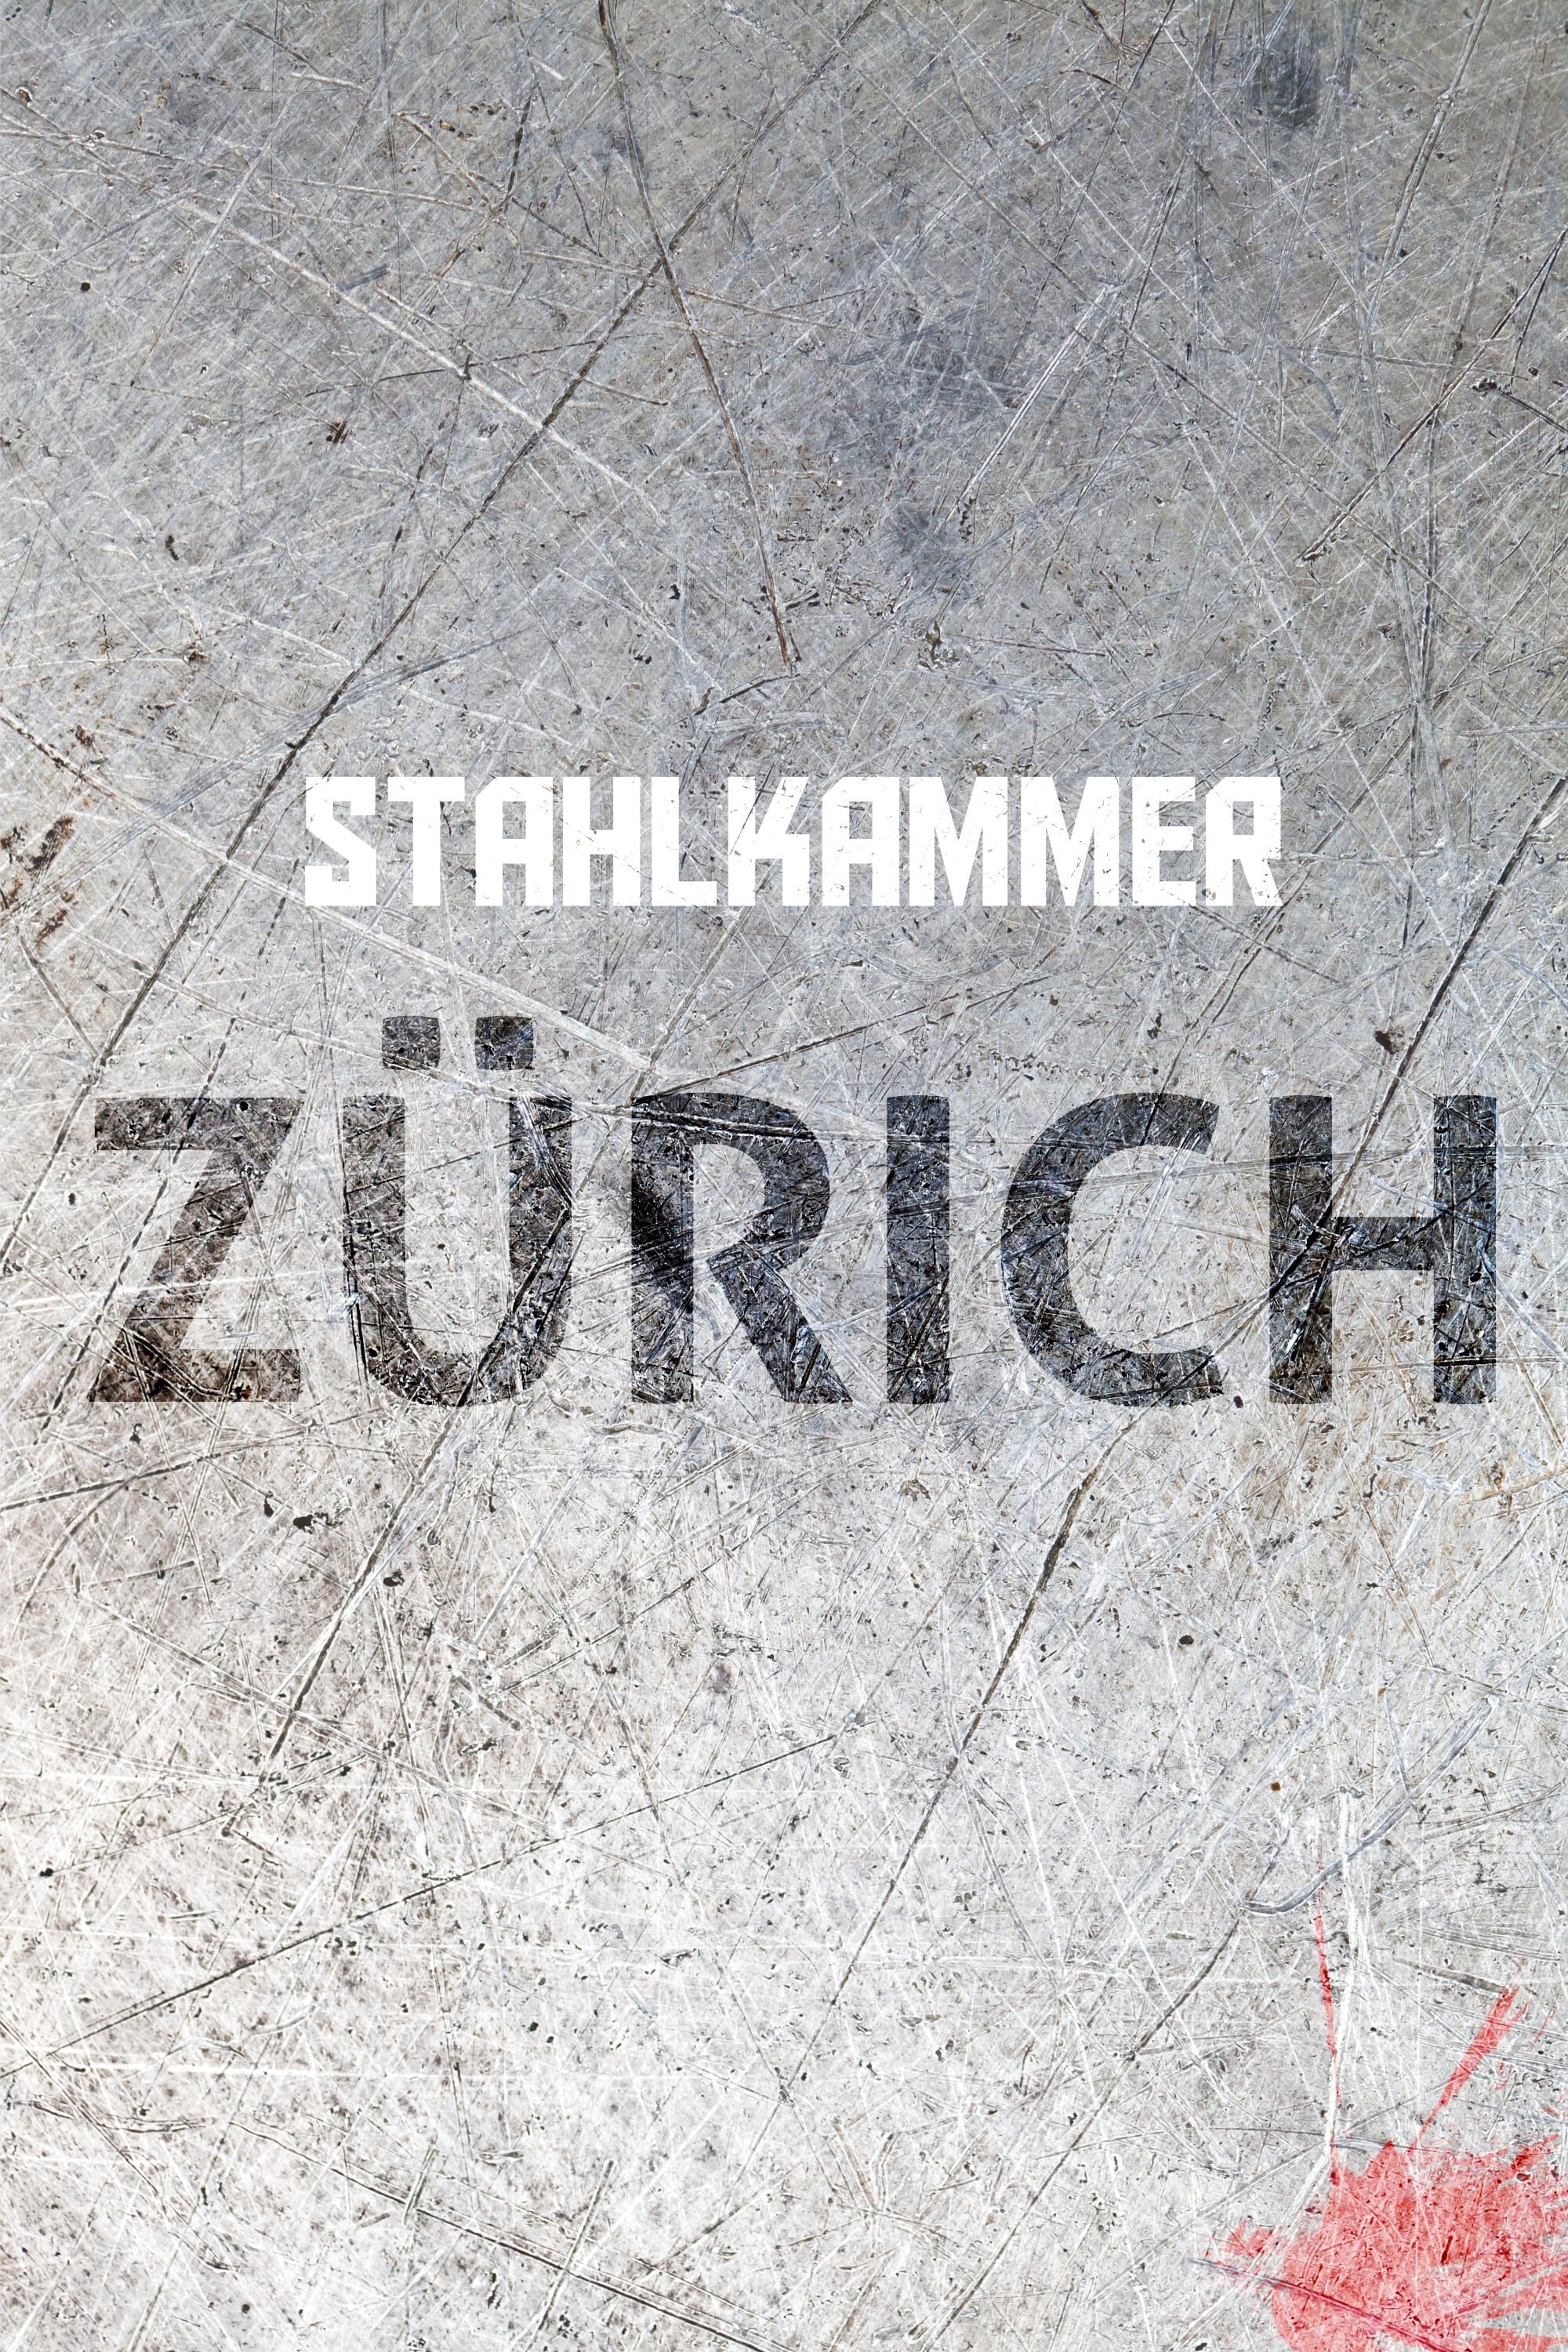 Stahlkammer Zürich TV Shows About Bank